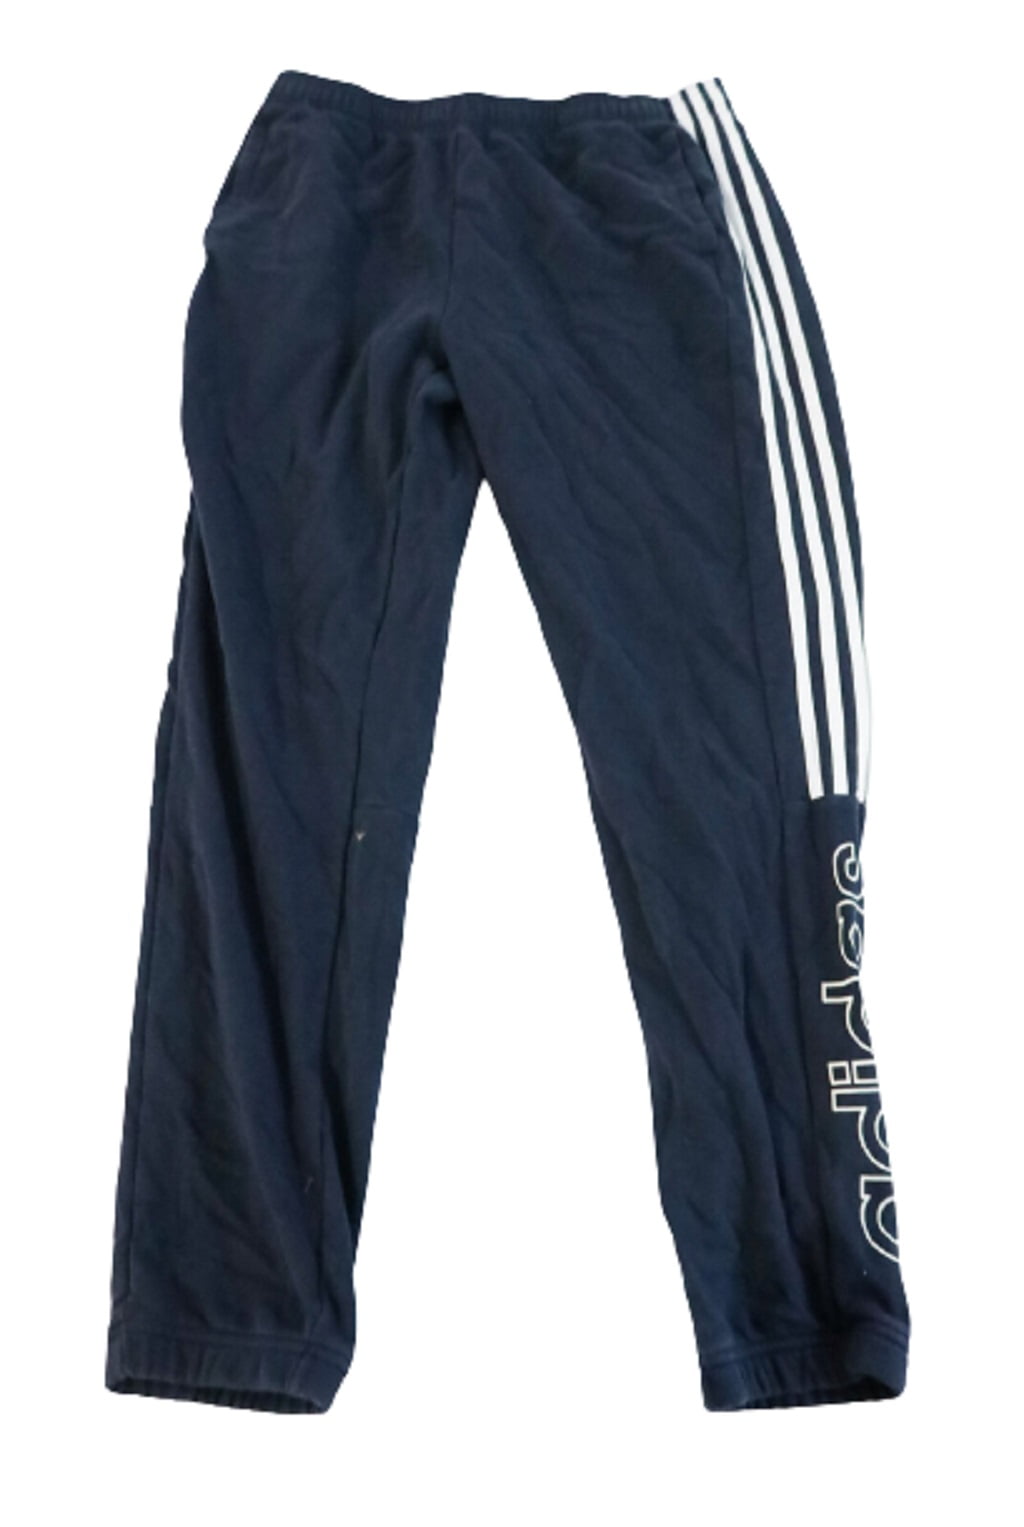 adidas Mens Pull On Sereno 19 Training Jogger Pants - Walmart.com